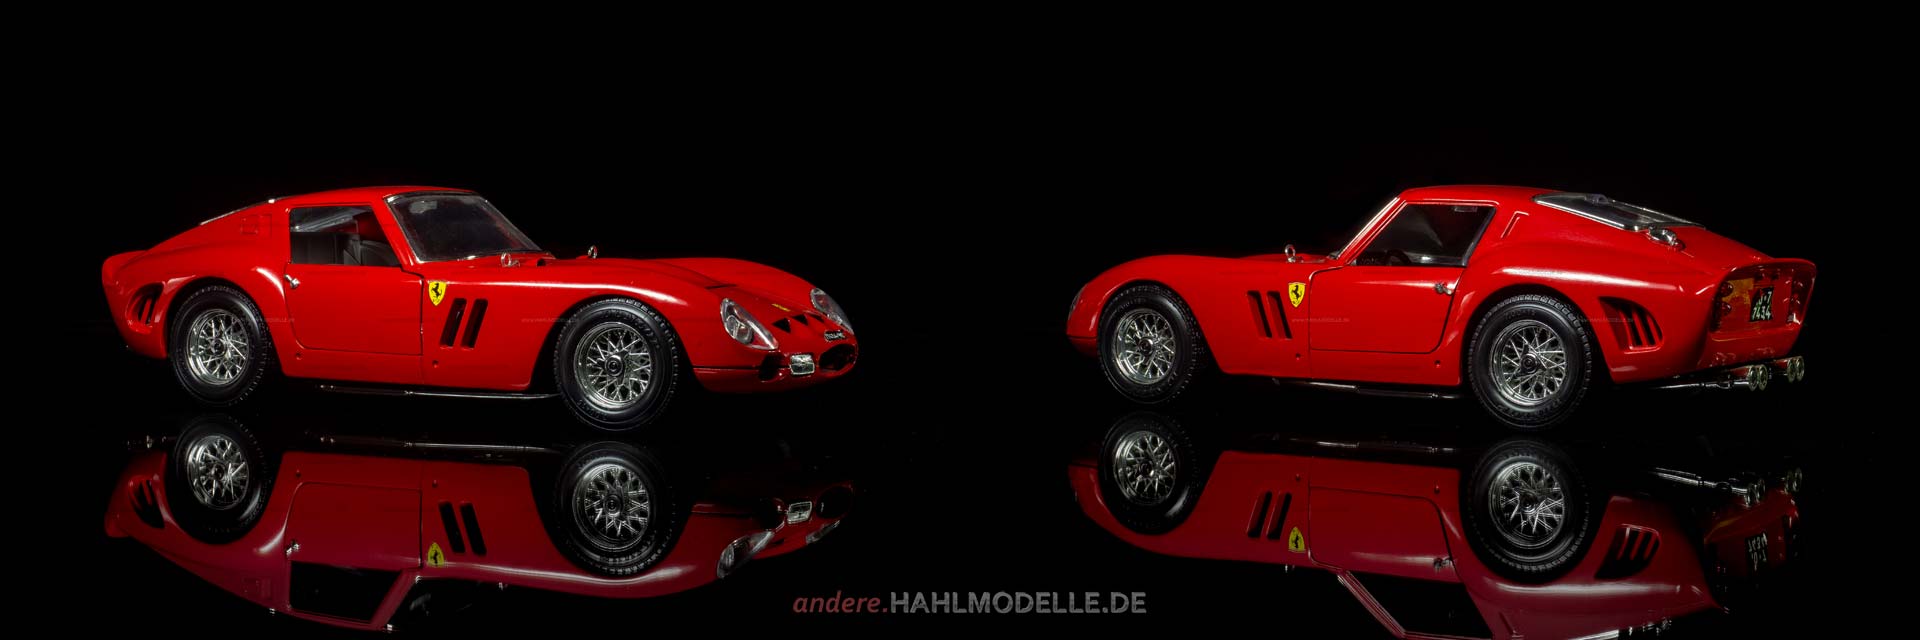 Ferrari 250 GTO | Coupé | Bburago | 1:18 | www.andere.hahlmodelle.de